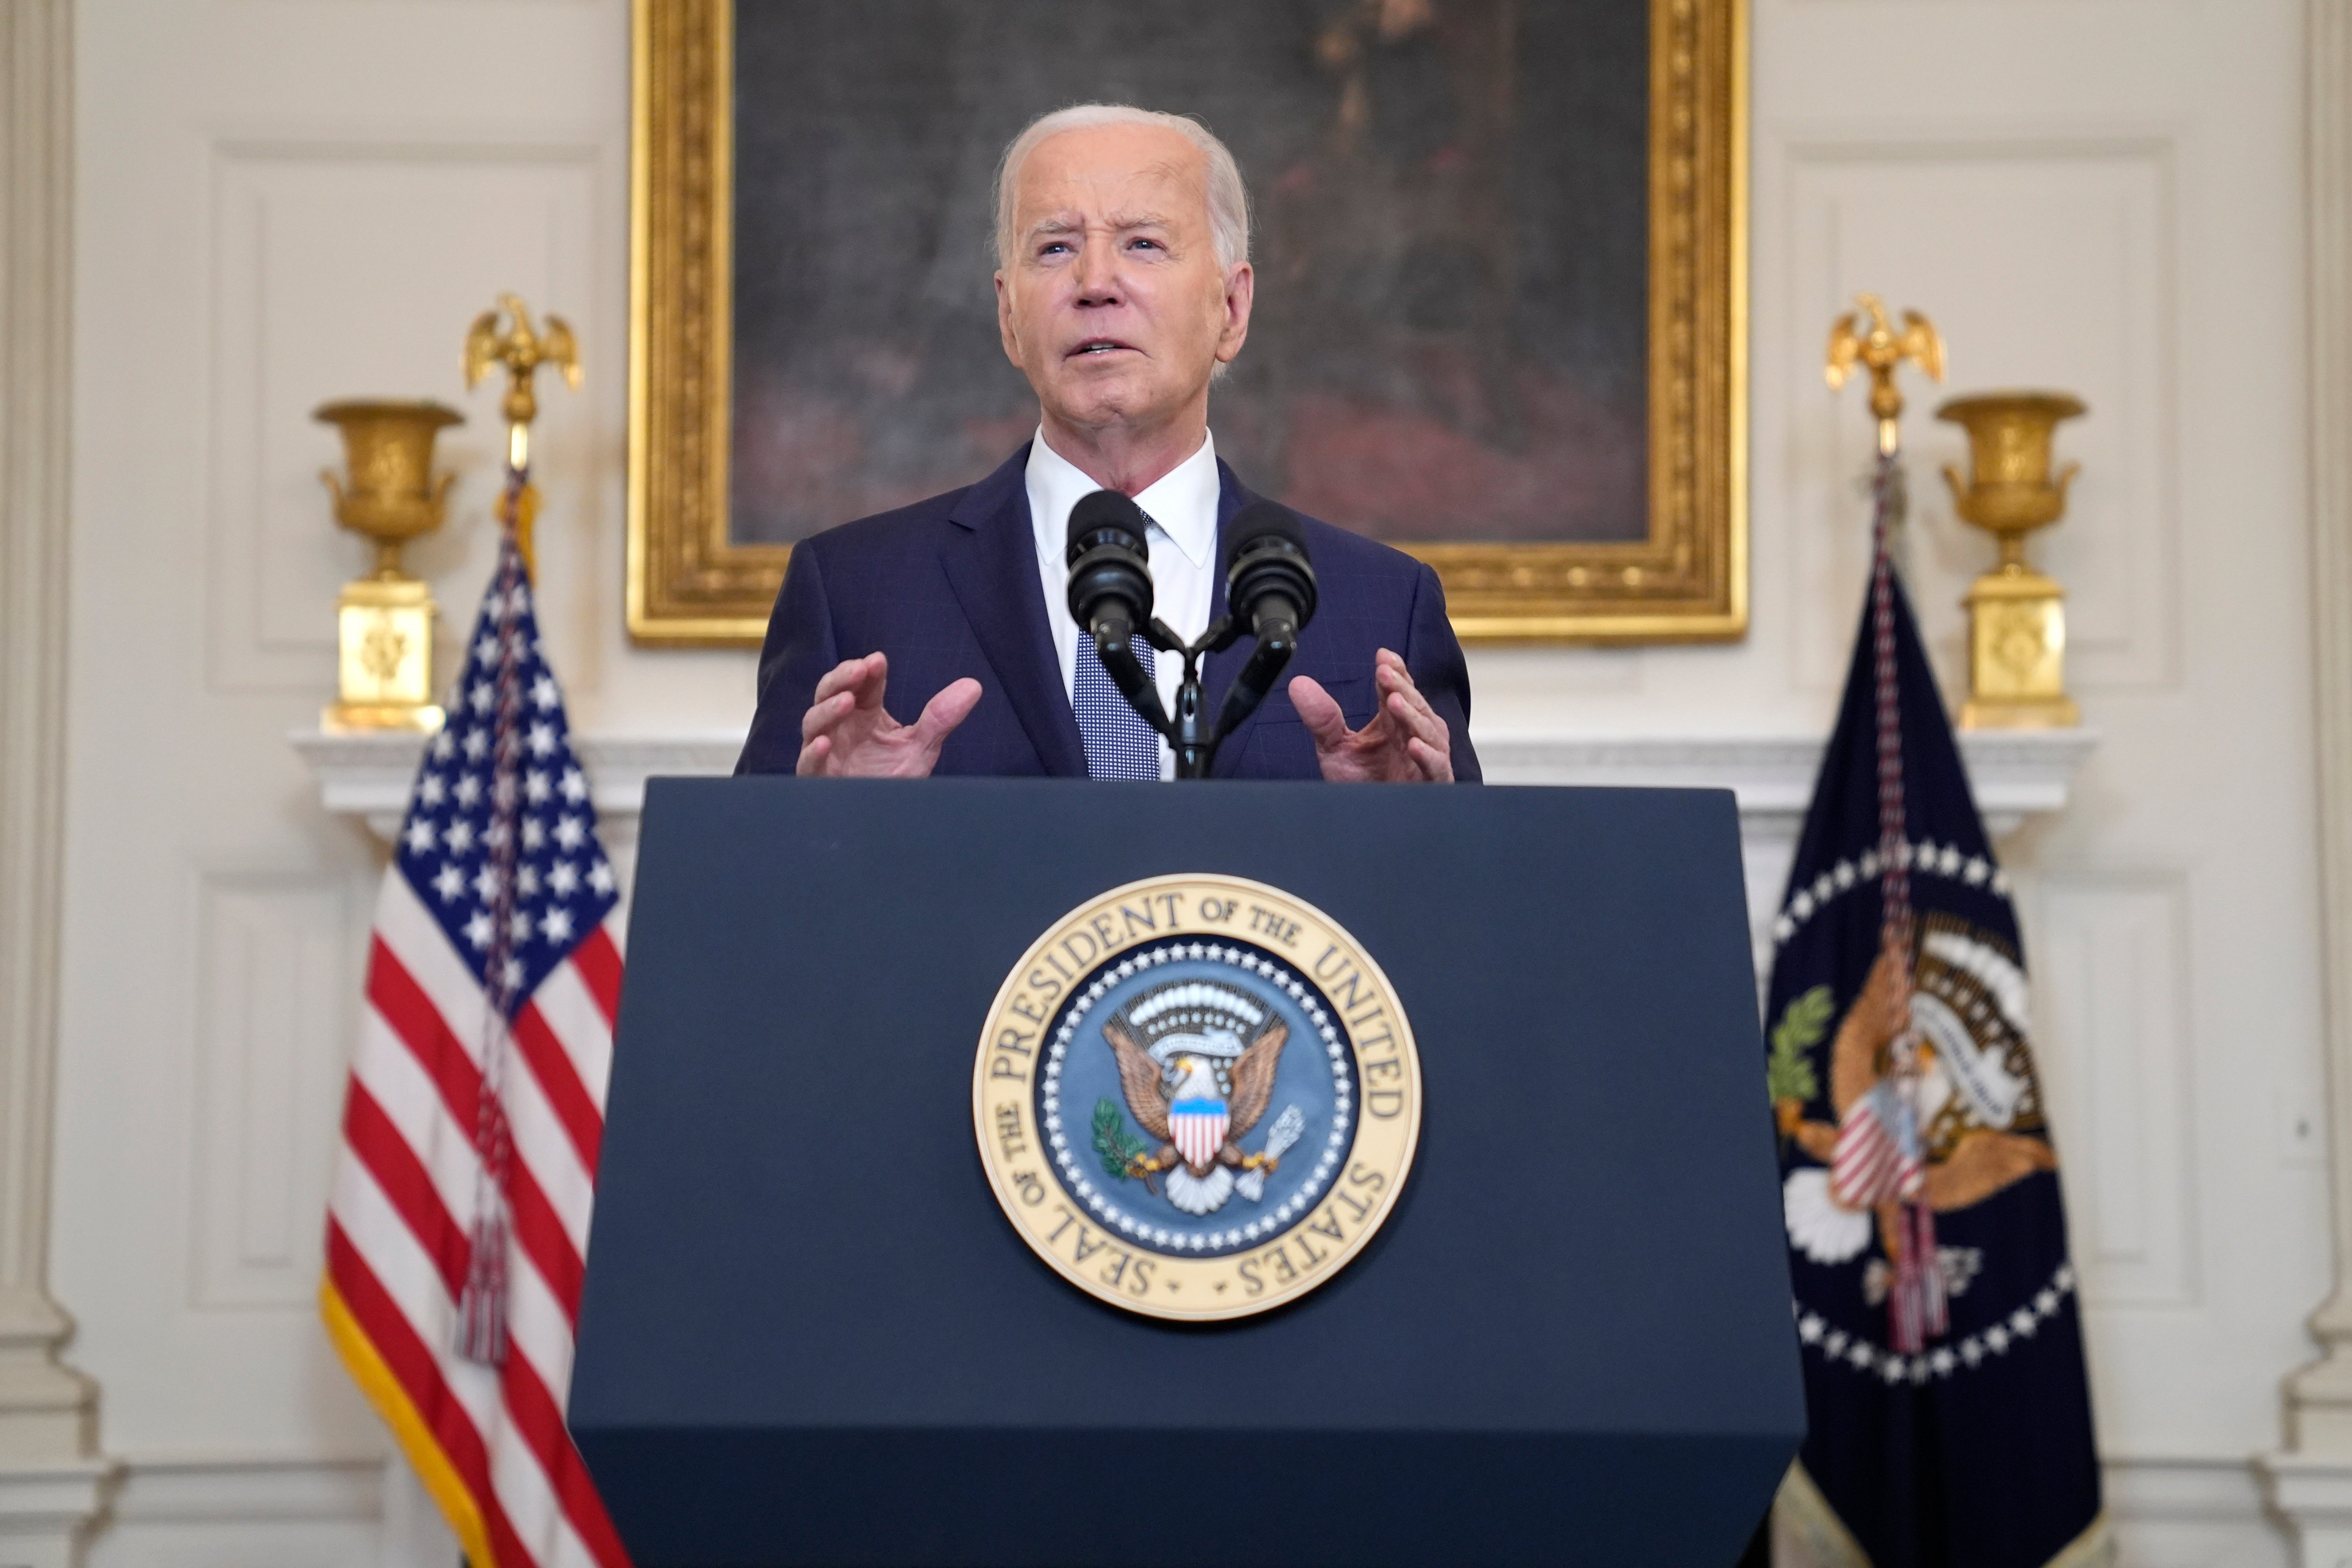 President Joe Biden is falling behind in the polls